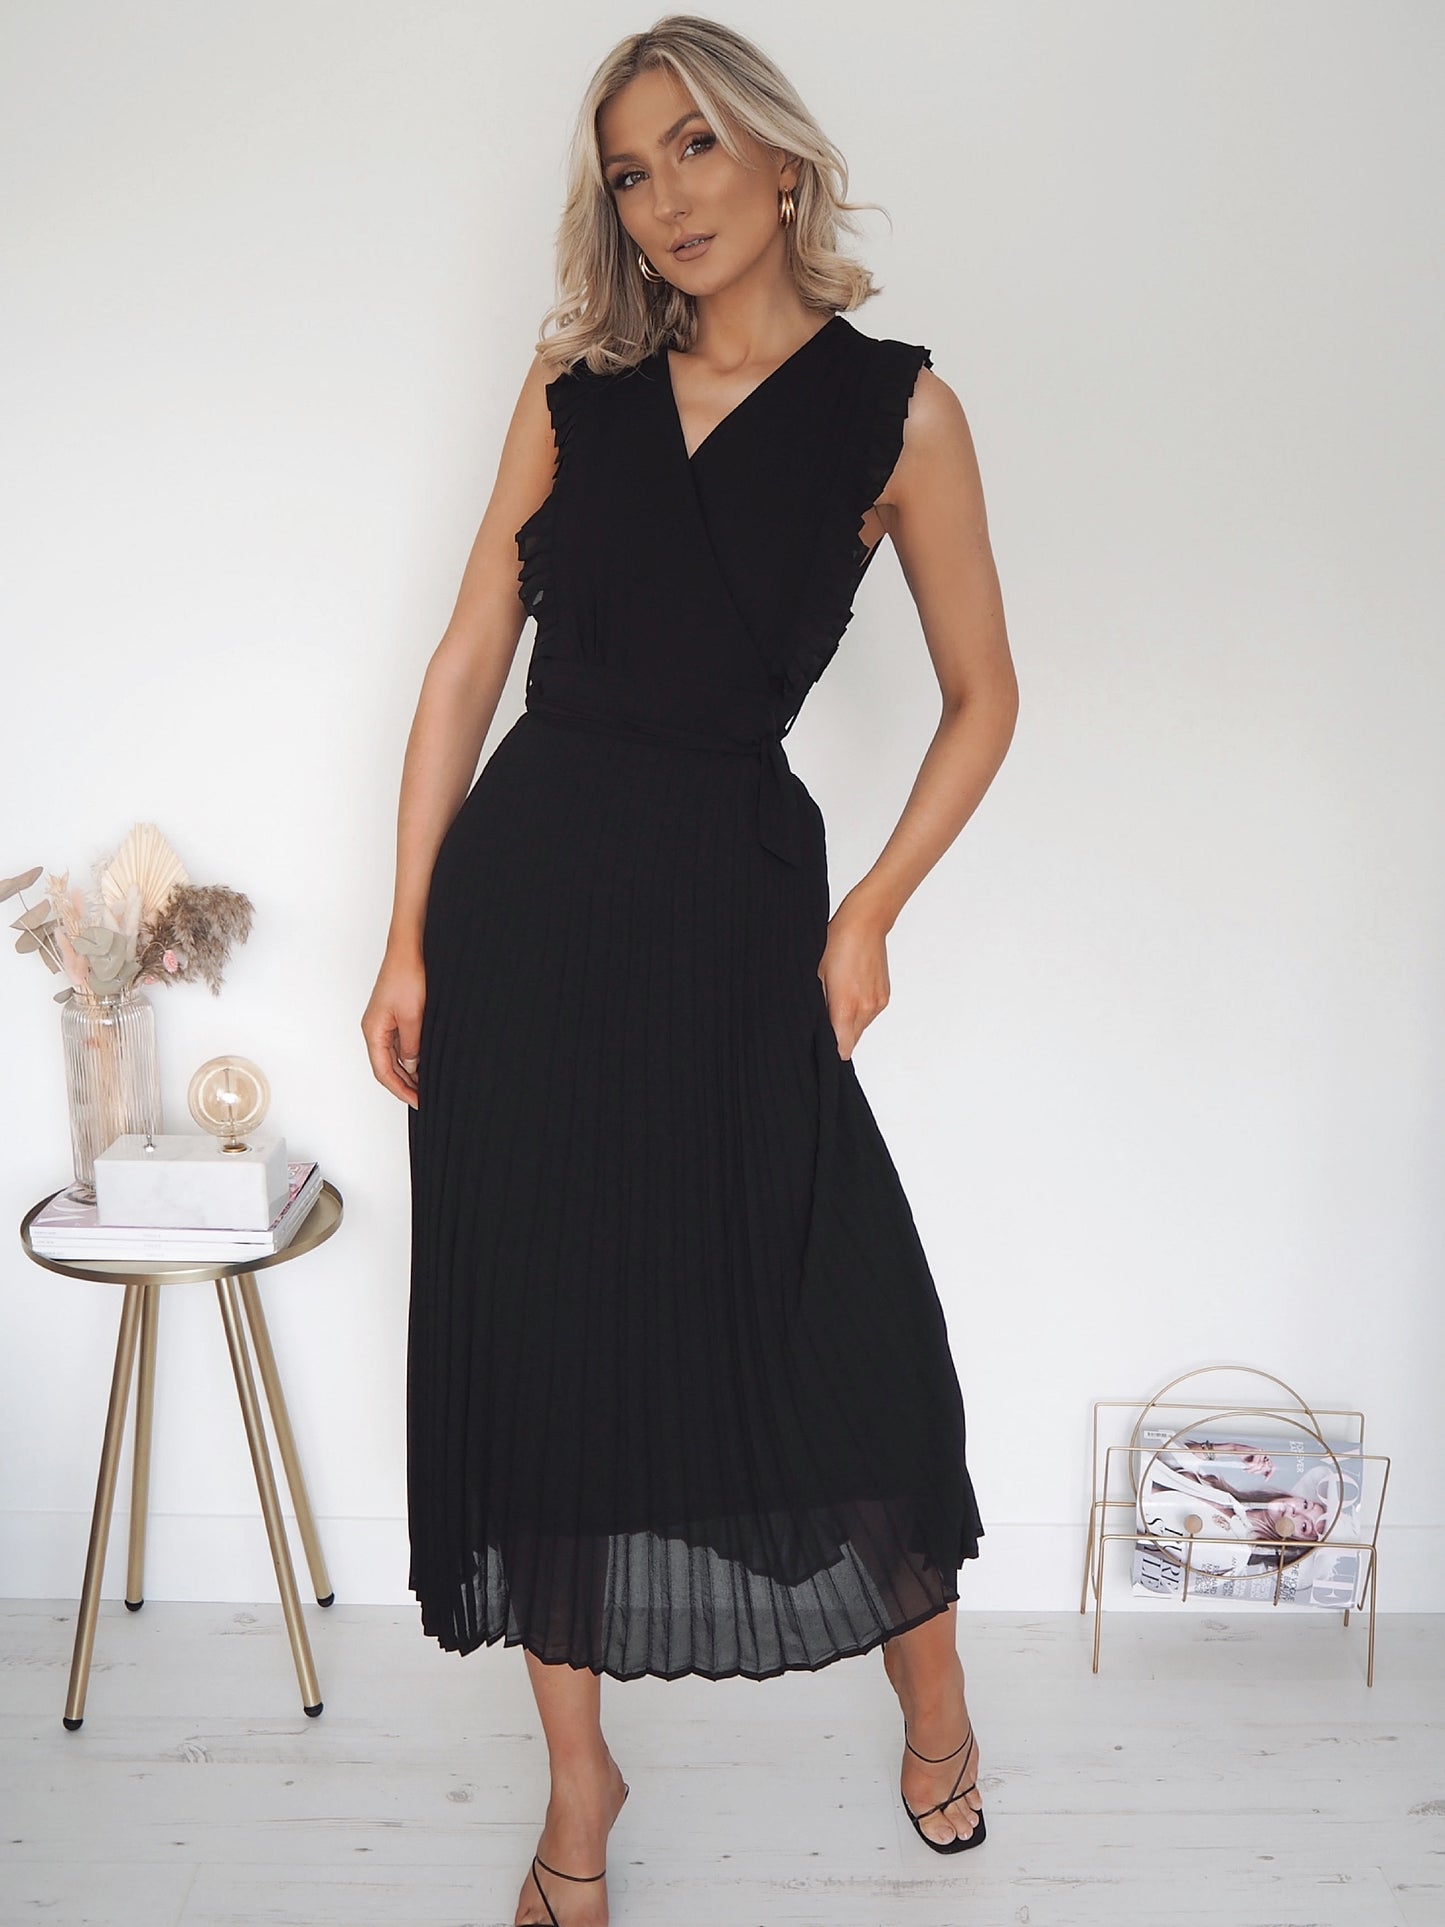 Maura Black Frill Sleeve Dress